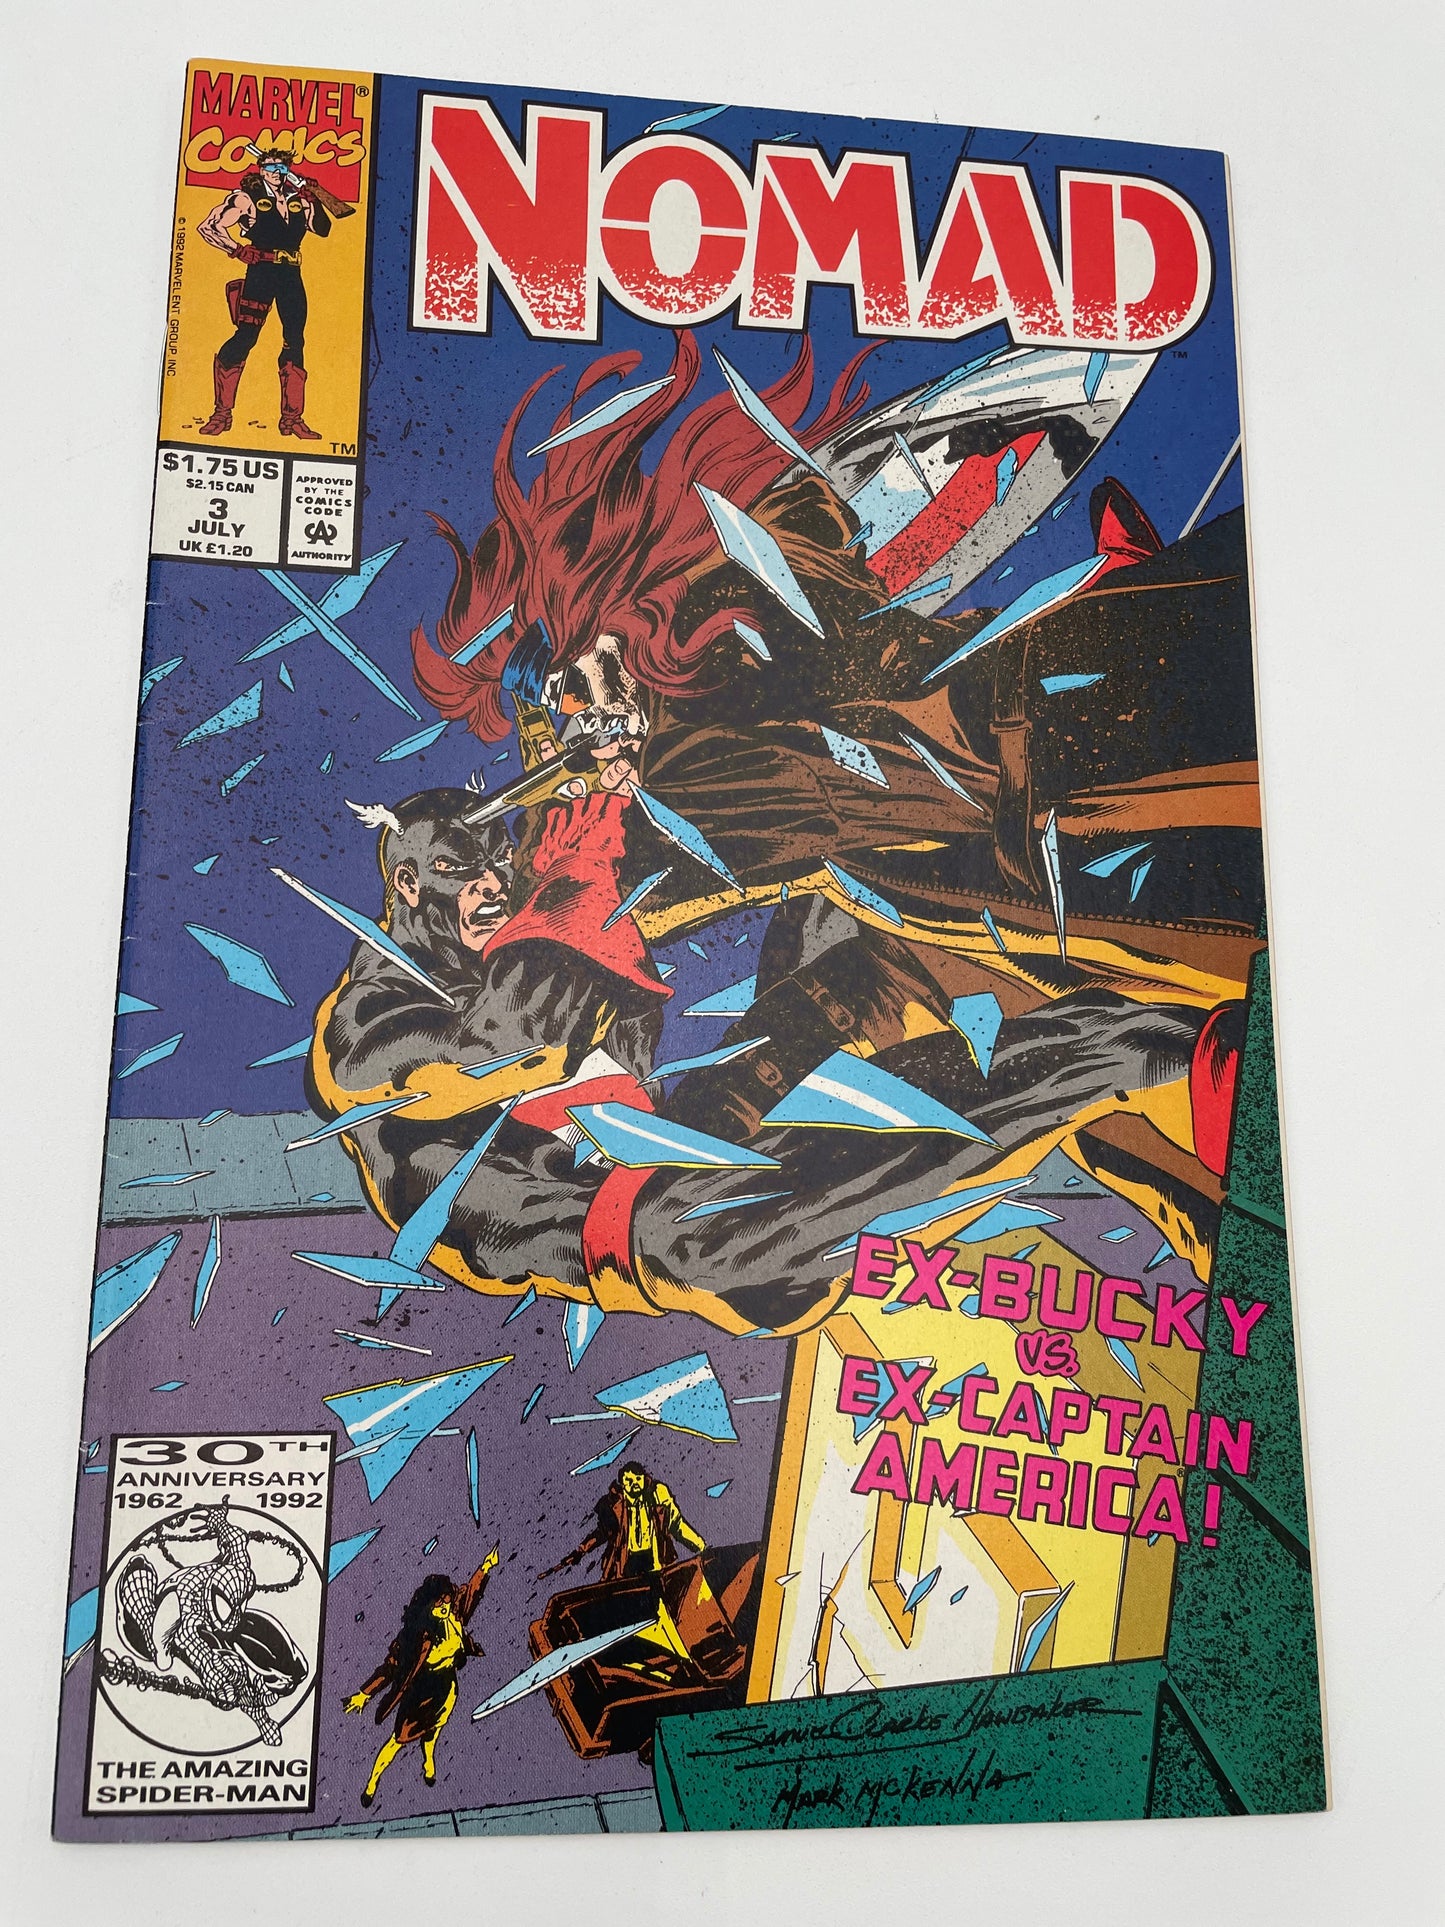 Marvel Comics - Nomad #3 - July 1992 #102239